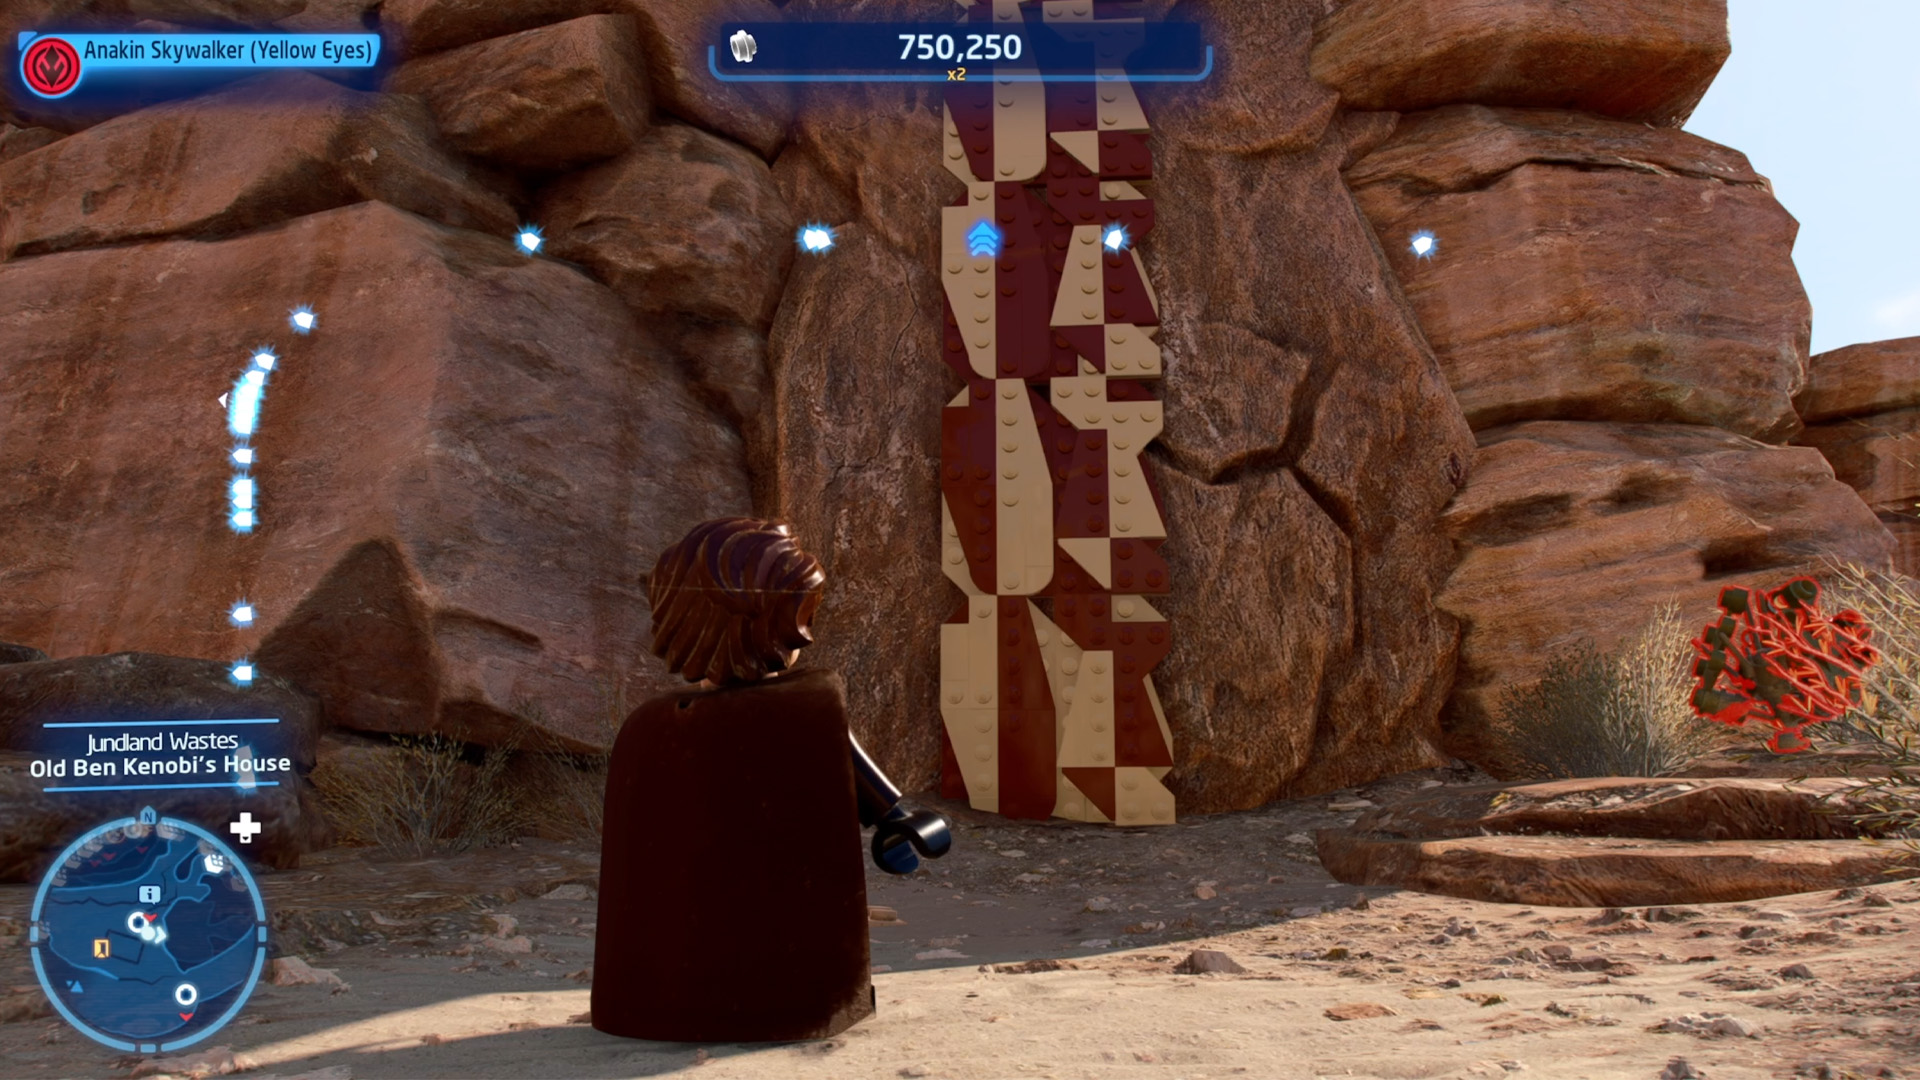 Lego Star Wars The Skywalker Saga datacards tatooine